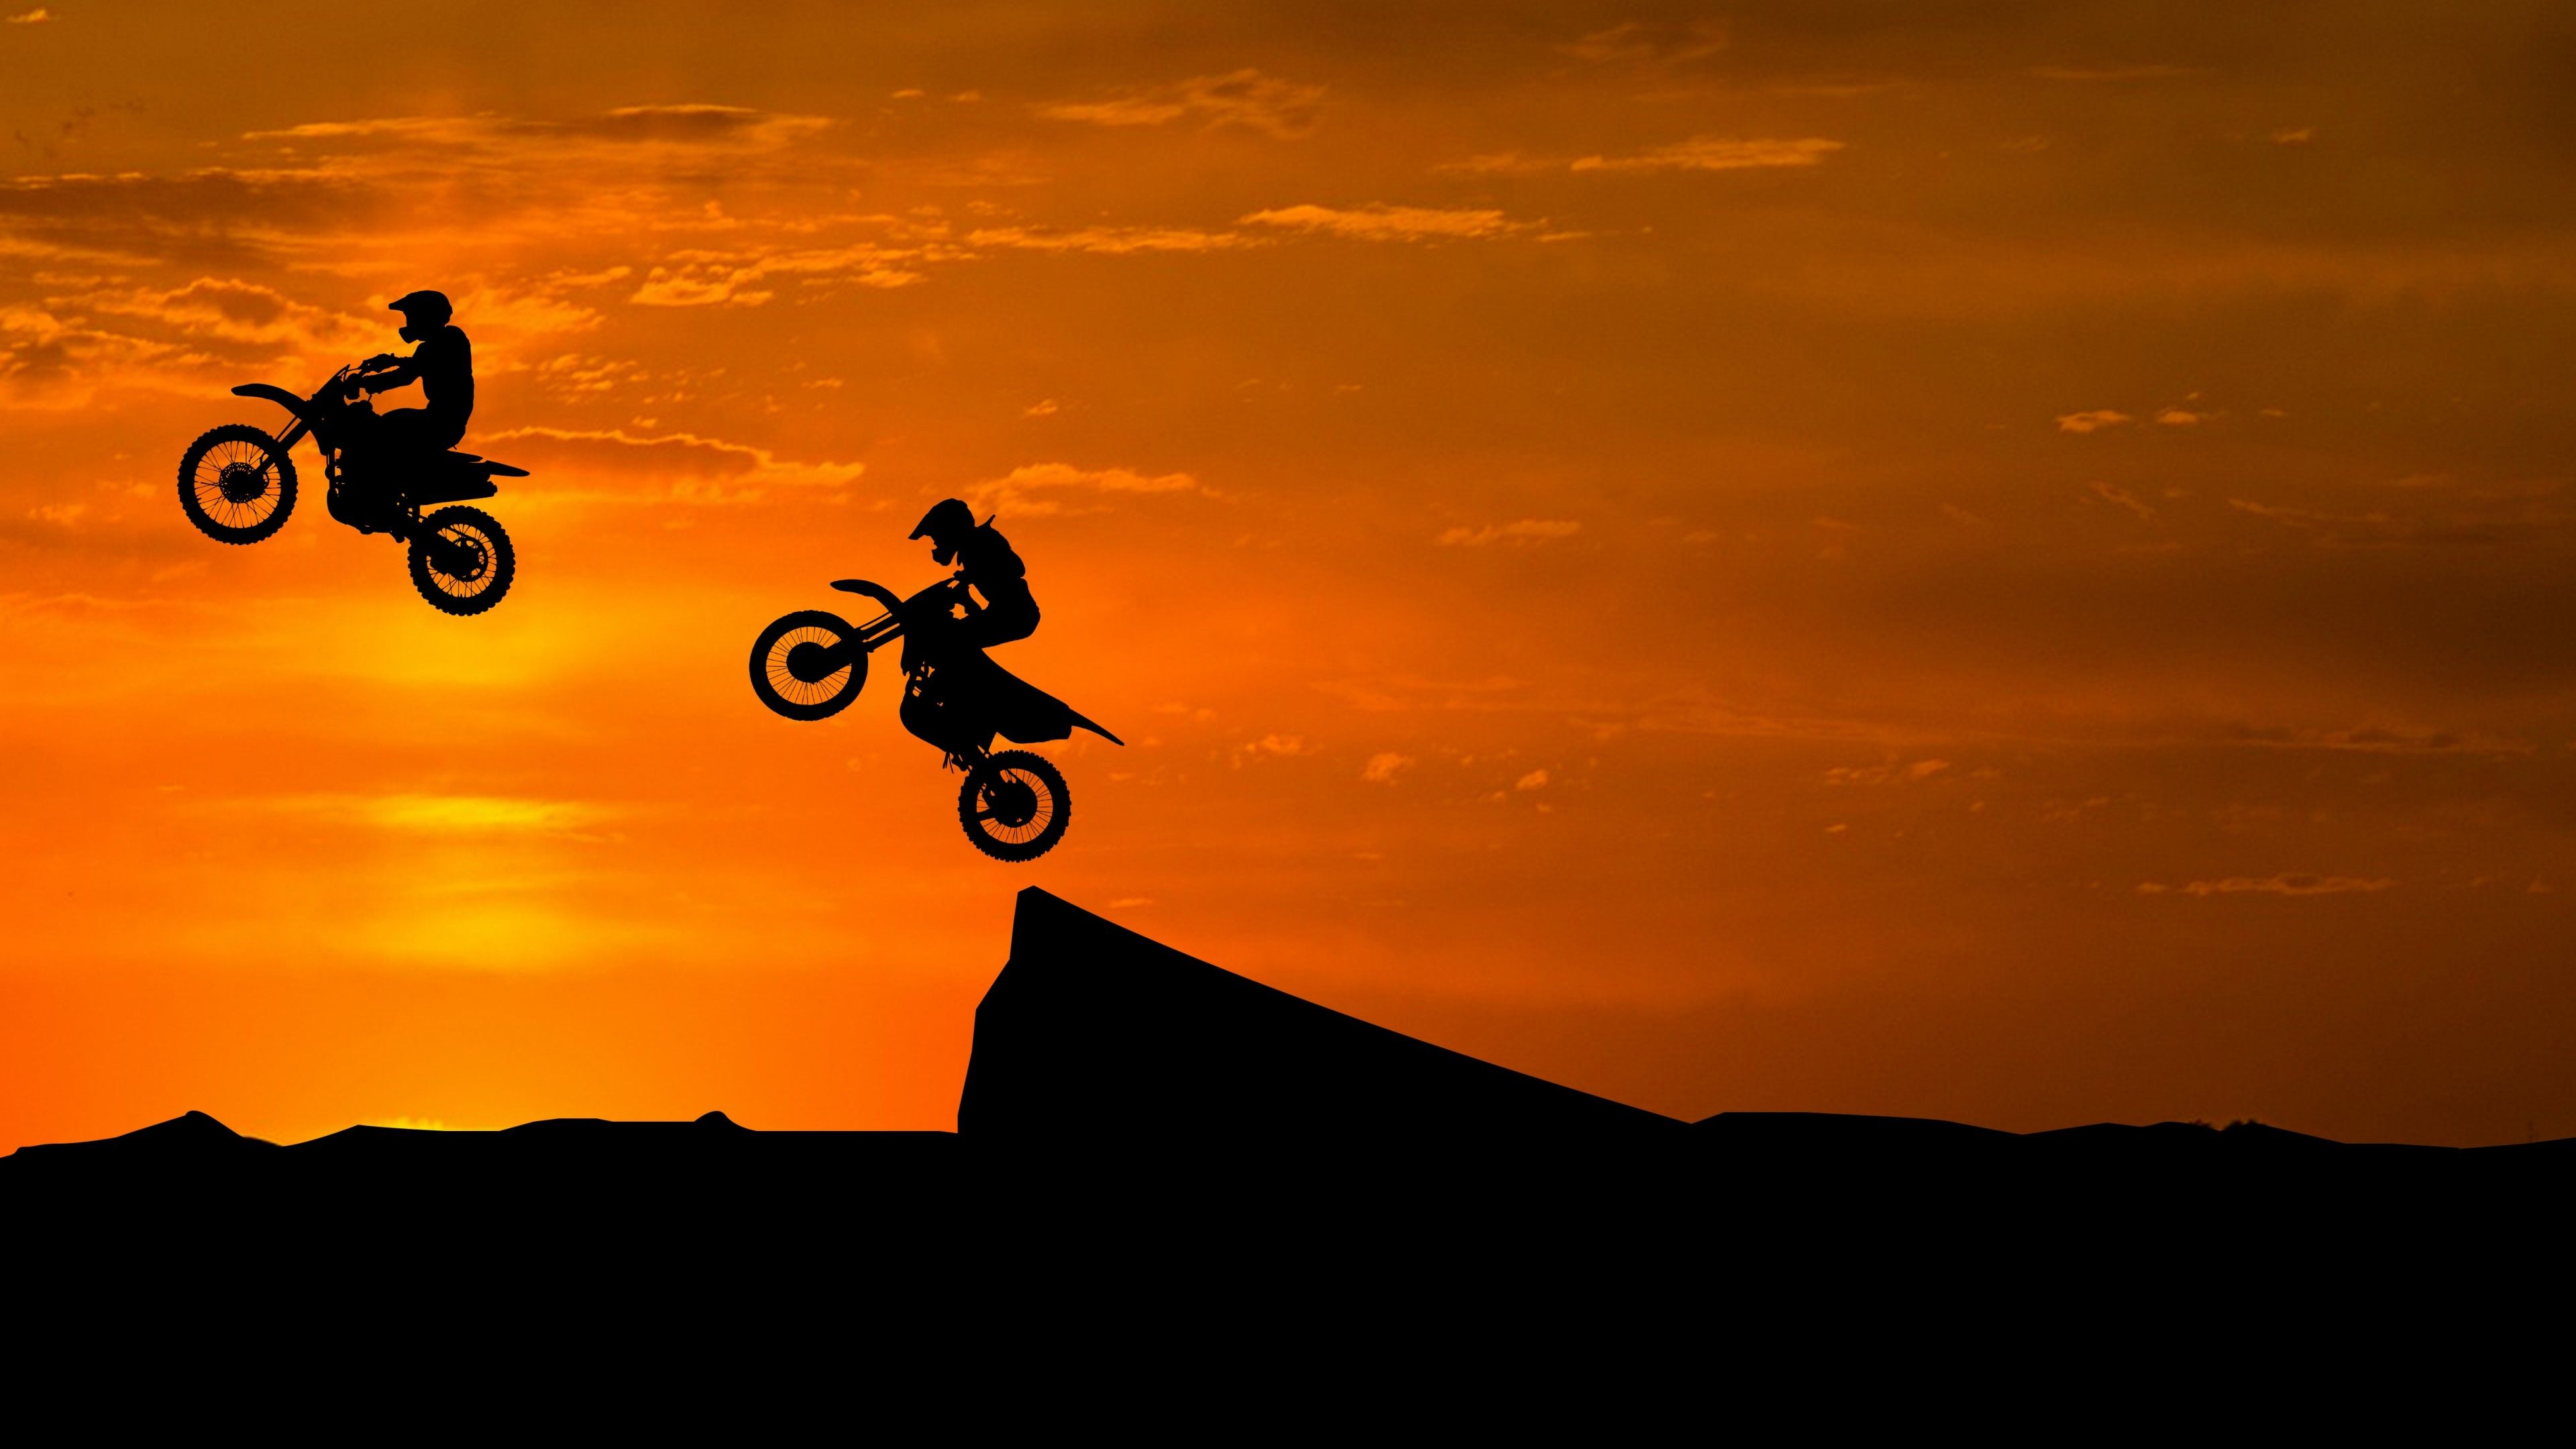 downloading Sunset Bike Racing - Motocross